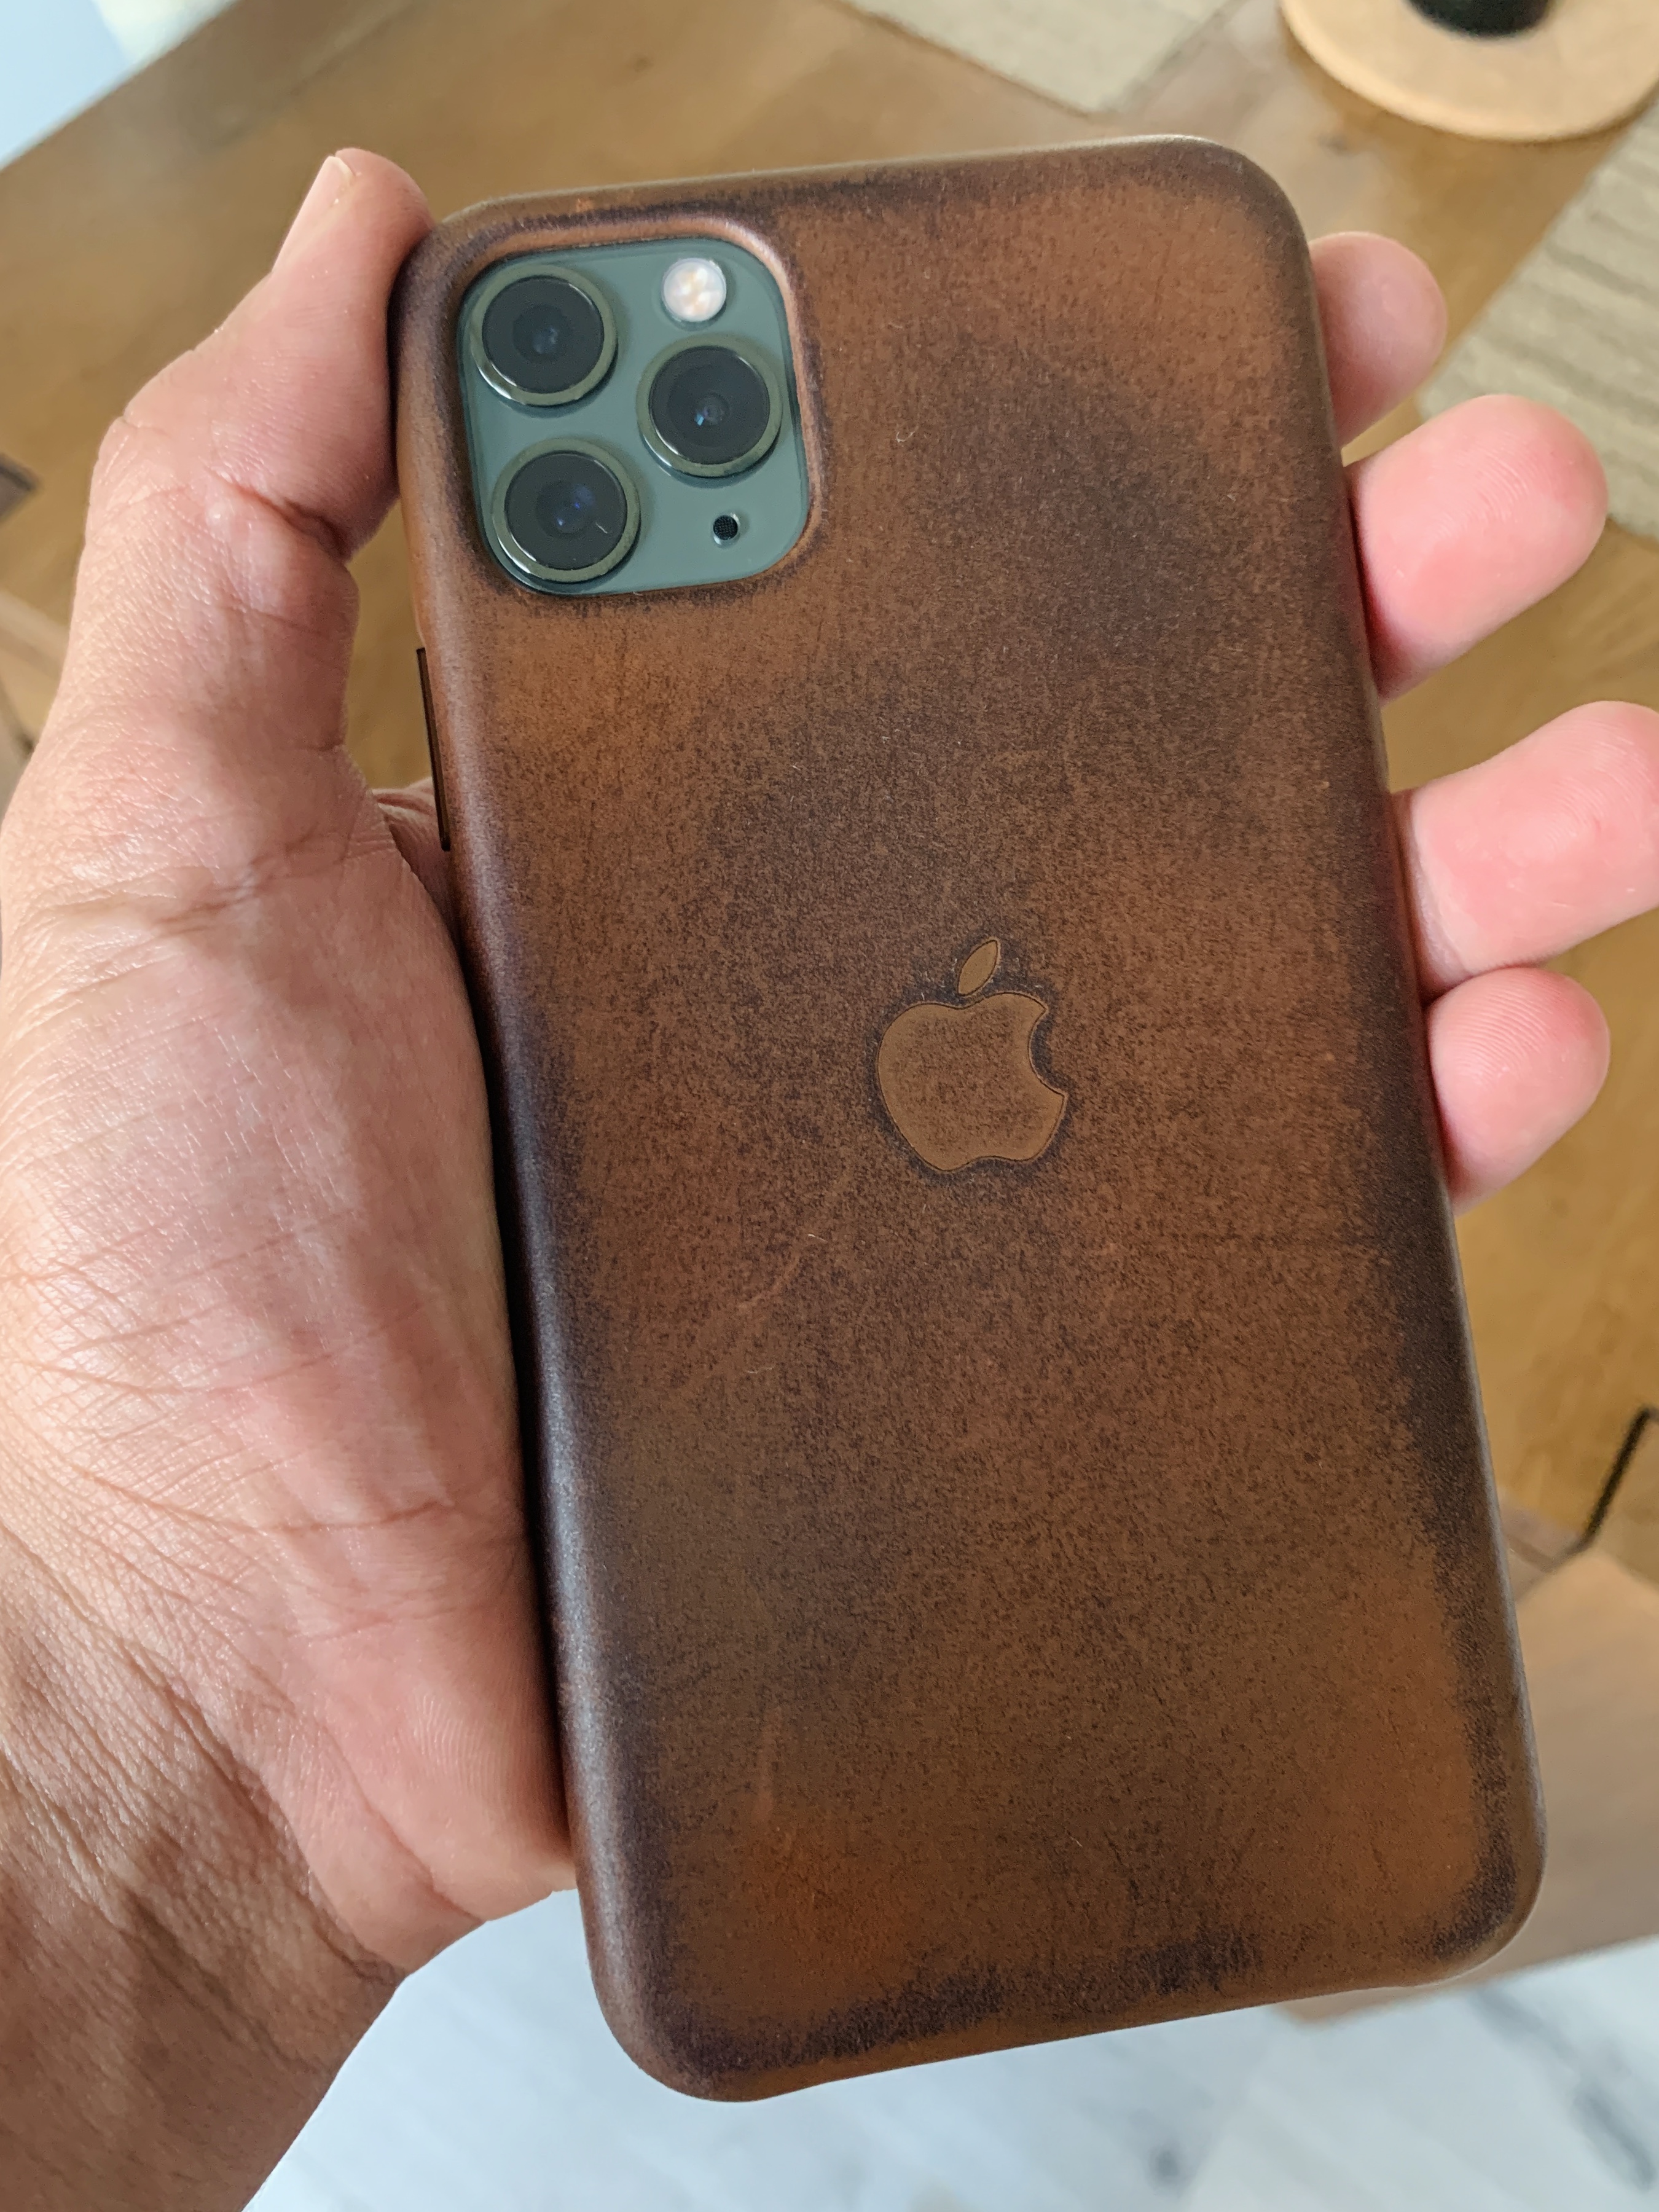 Apple Leather Cases - Patina Proud Photos | MacRumors Forums